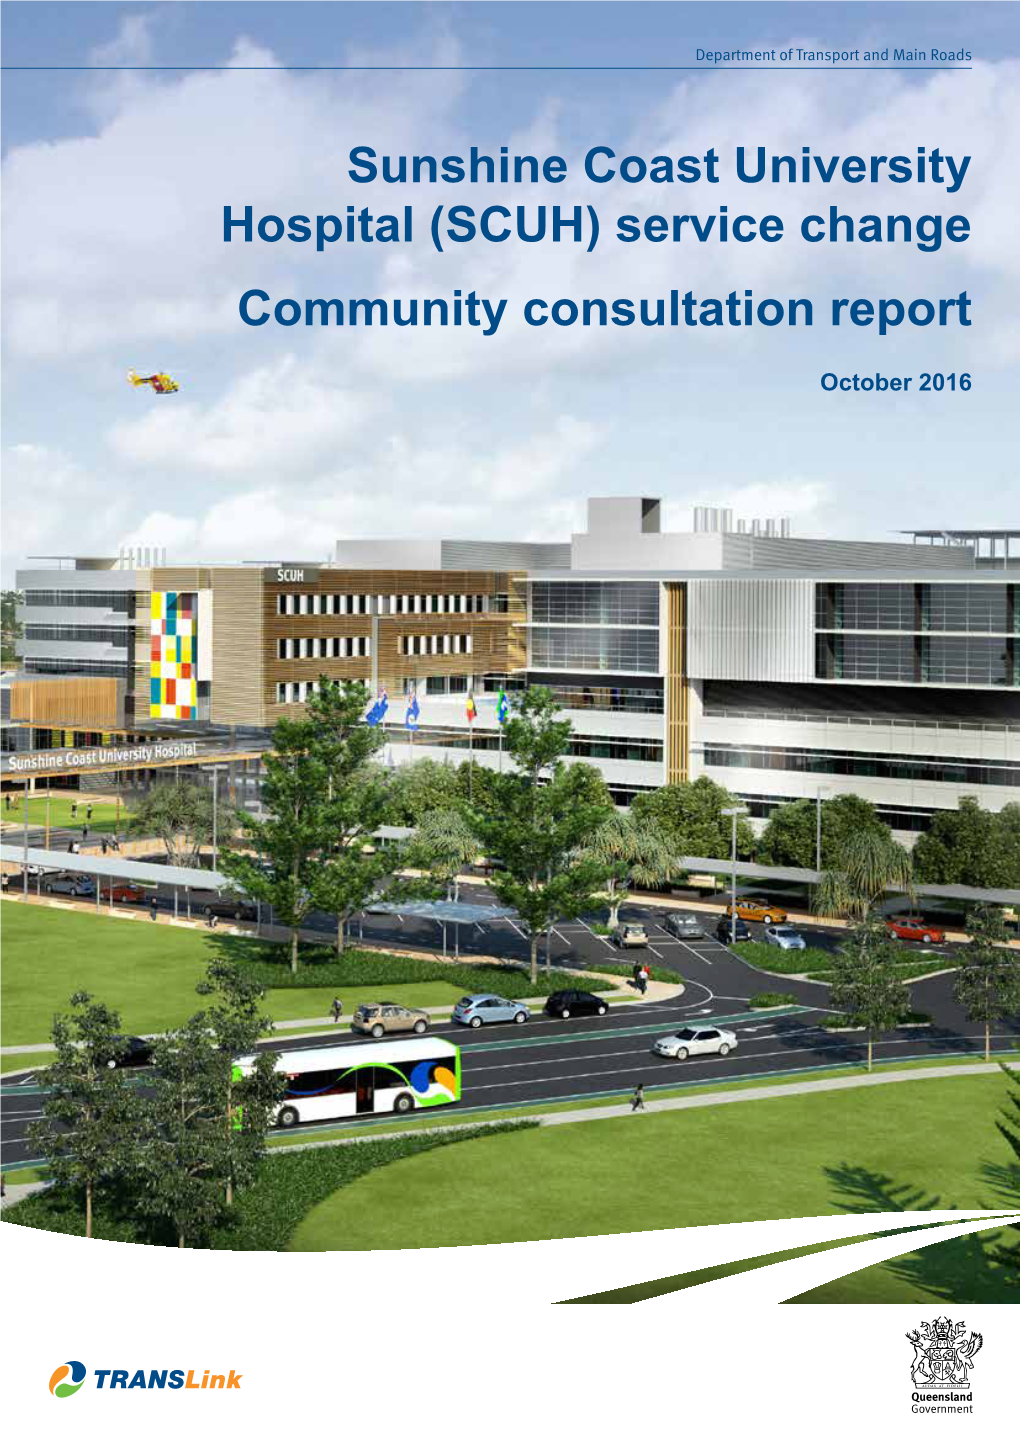 Sunshine Coast University Hospital (SCUH) Service Change Community Consultation Report